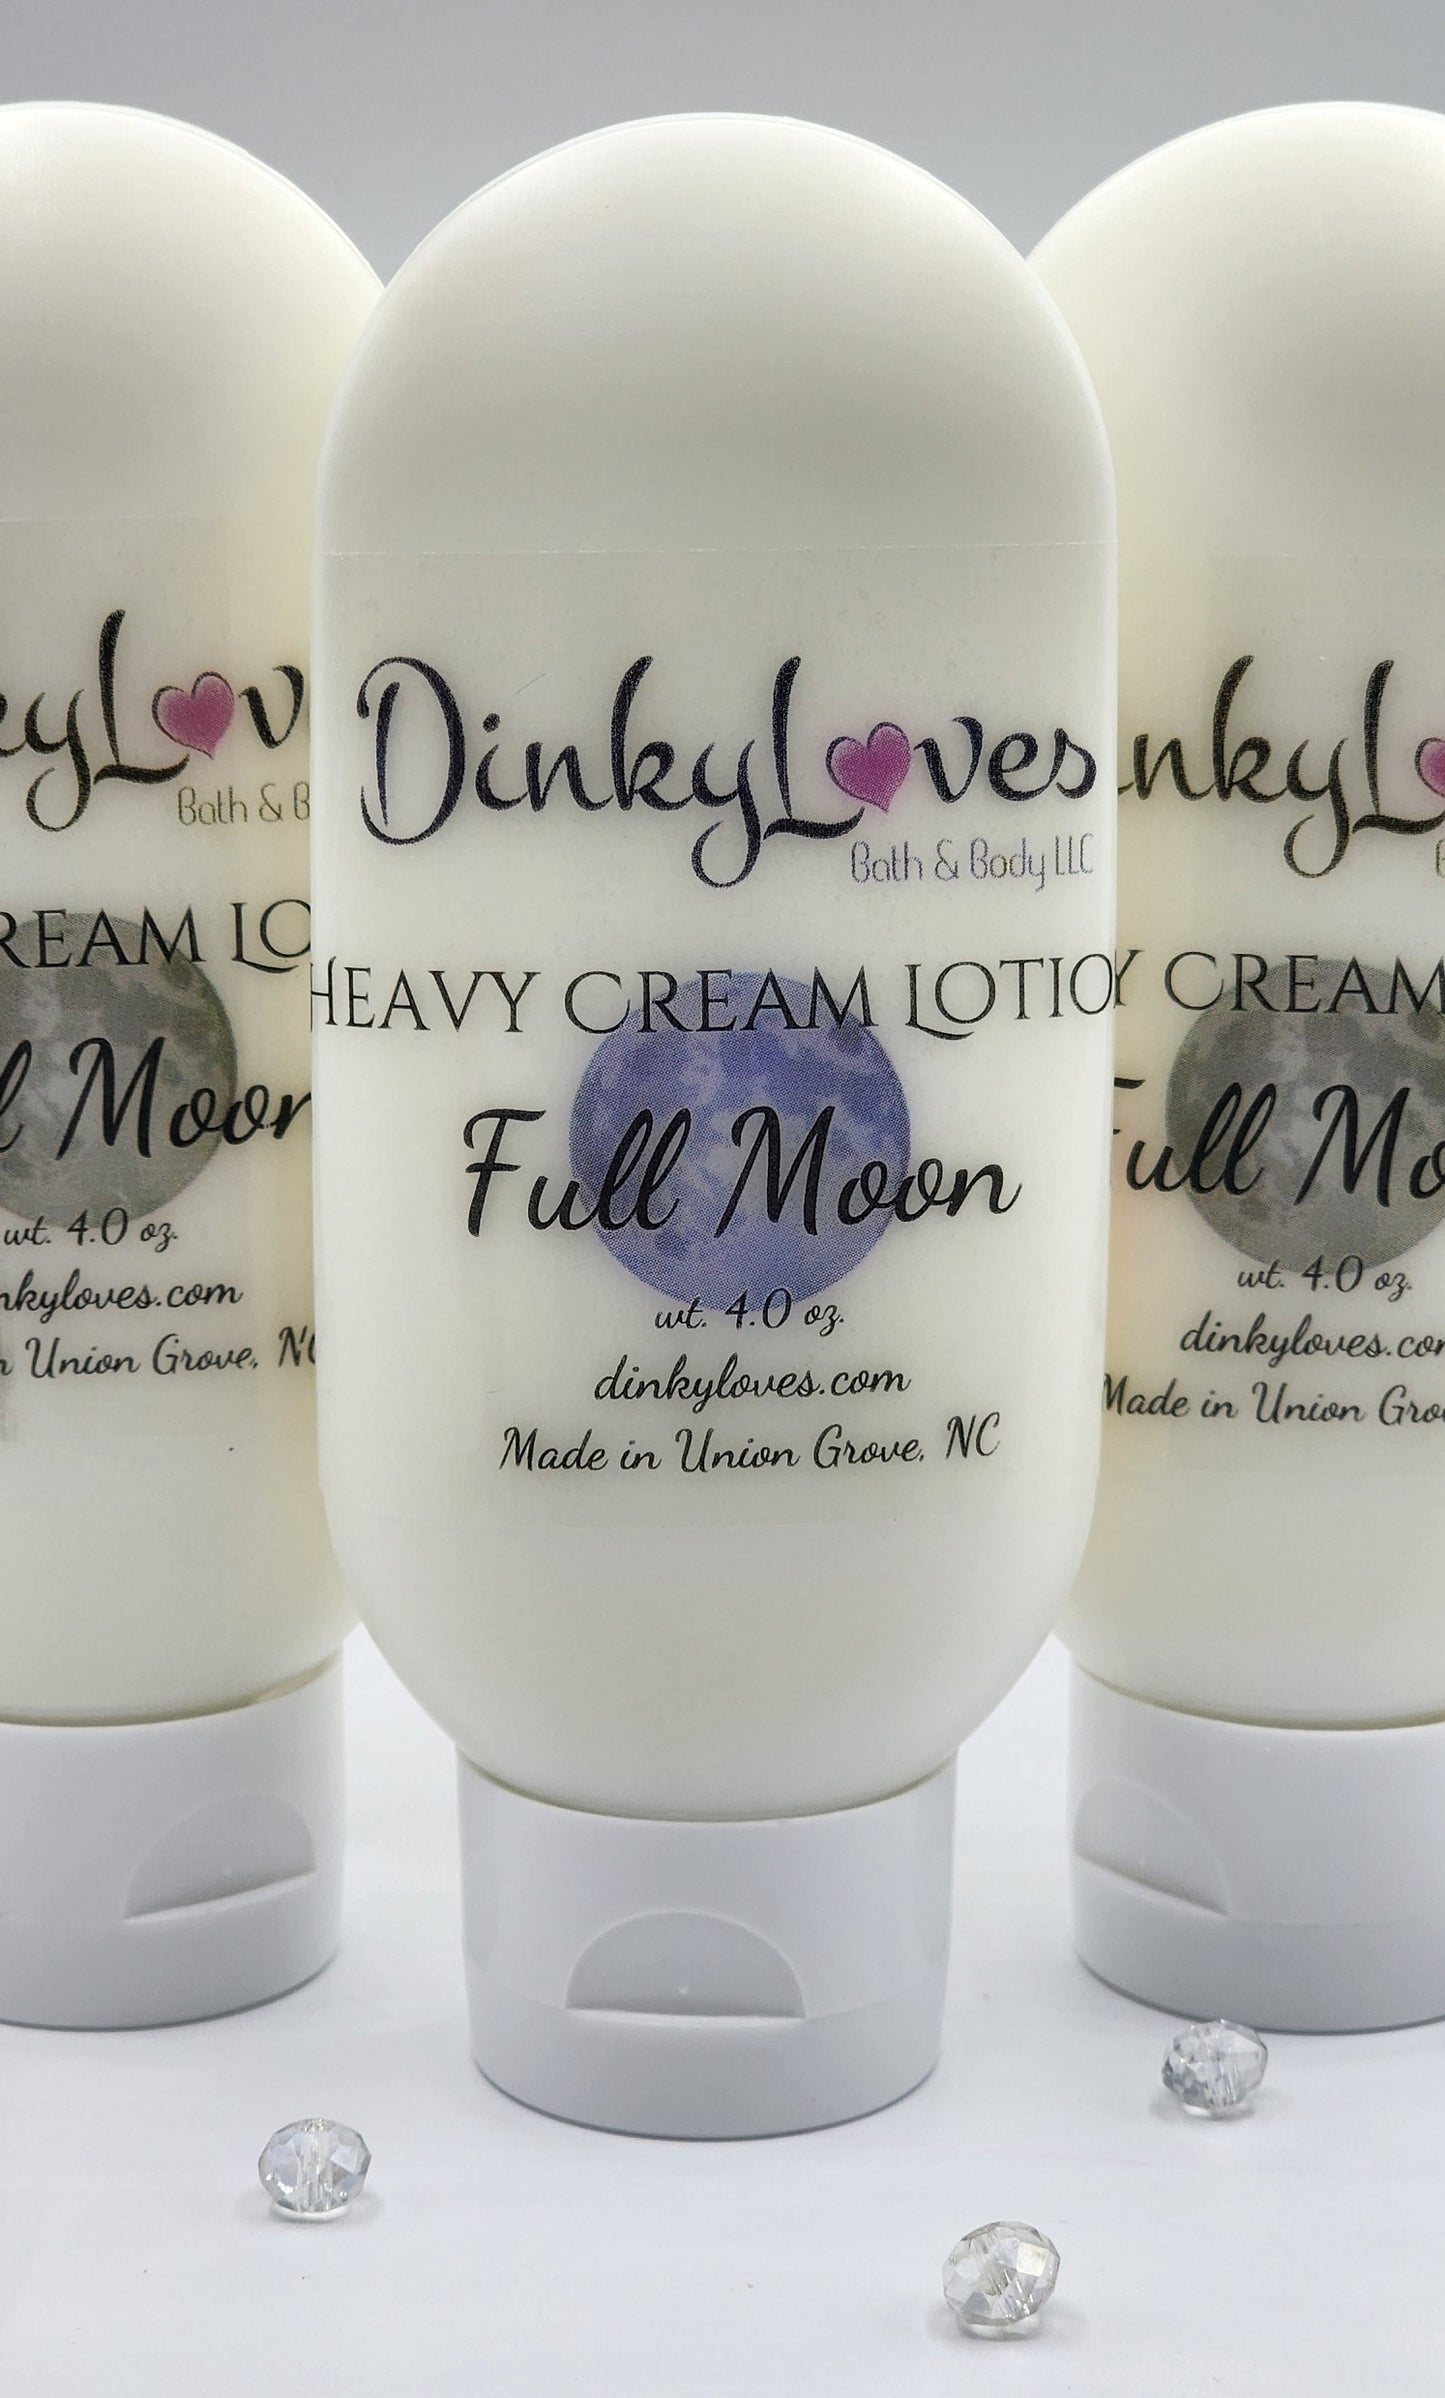 FULL MOON Heavy Cream Lotion / Handmade Lotion / Creamy Lotion / Purse Size Lotion